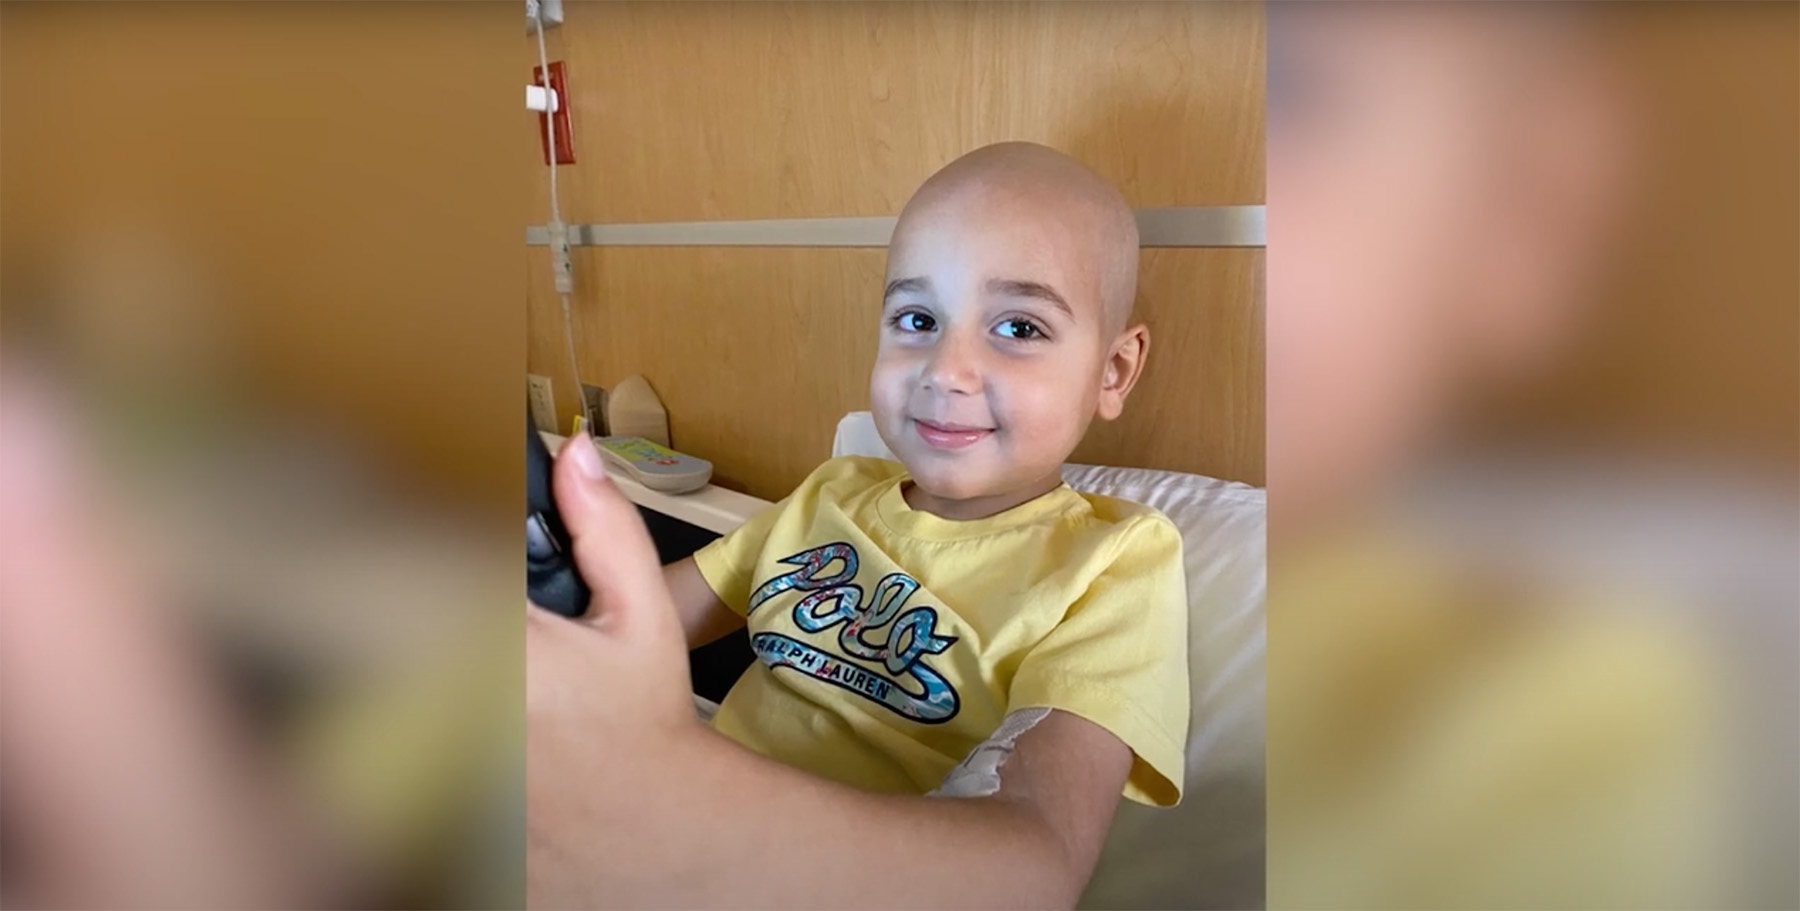 An adorable pediatric leukemia patient smiles at the camera.